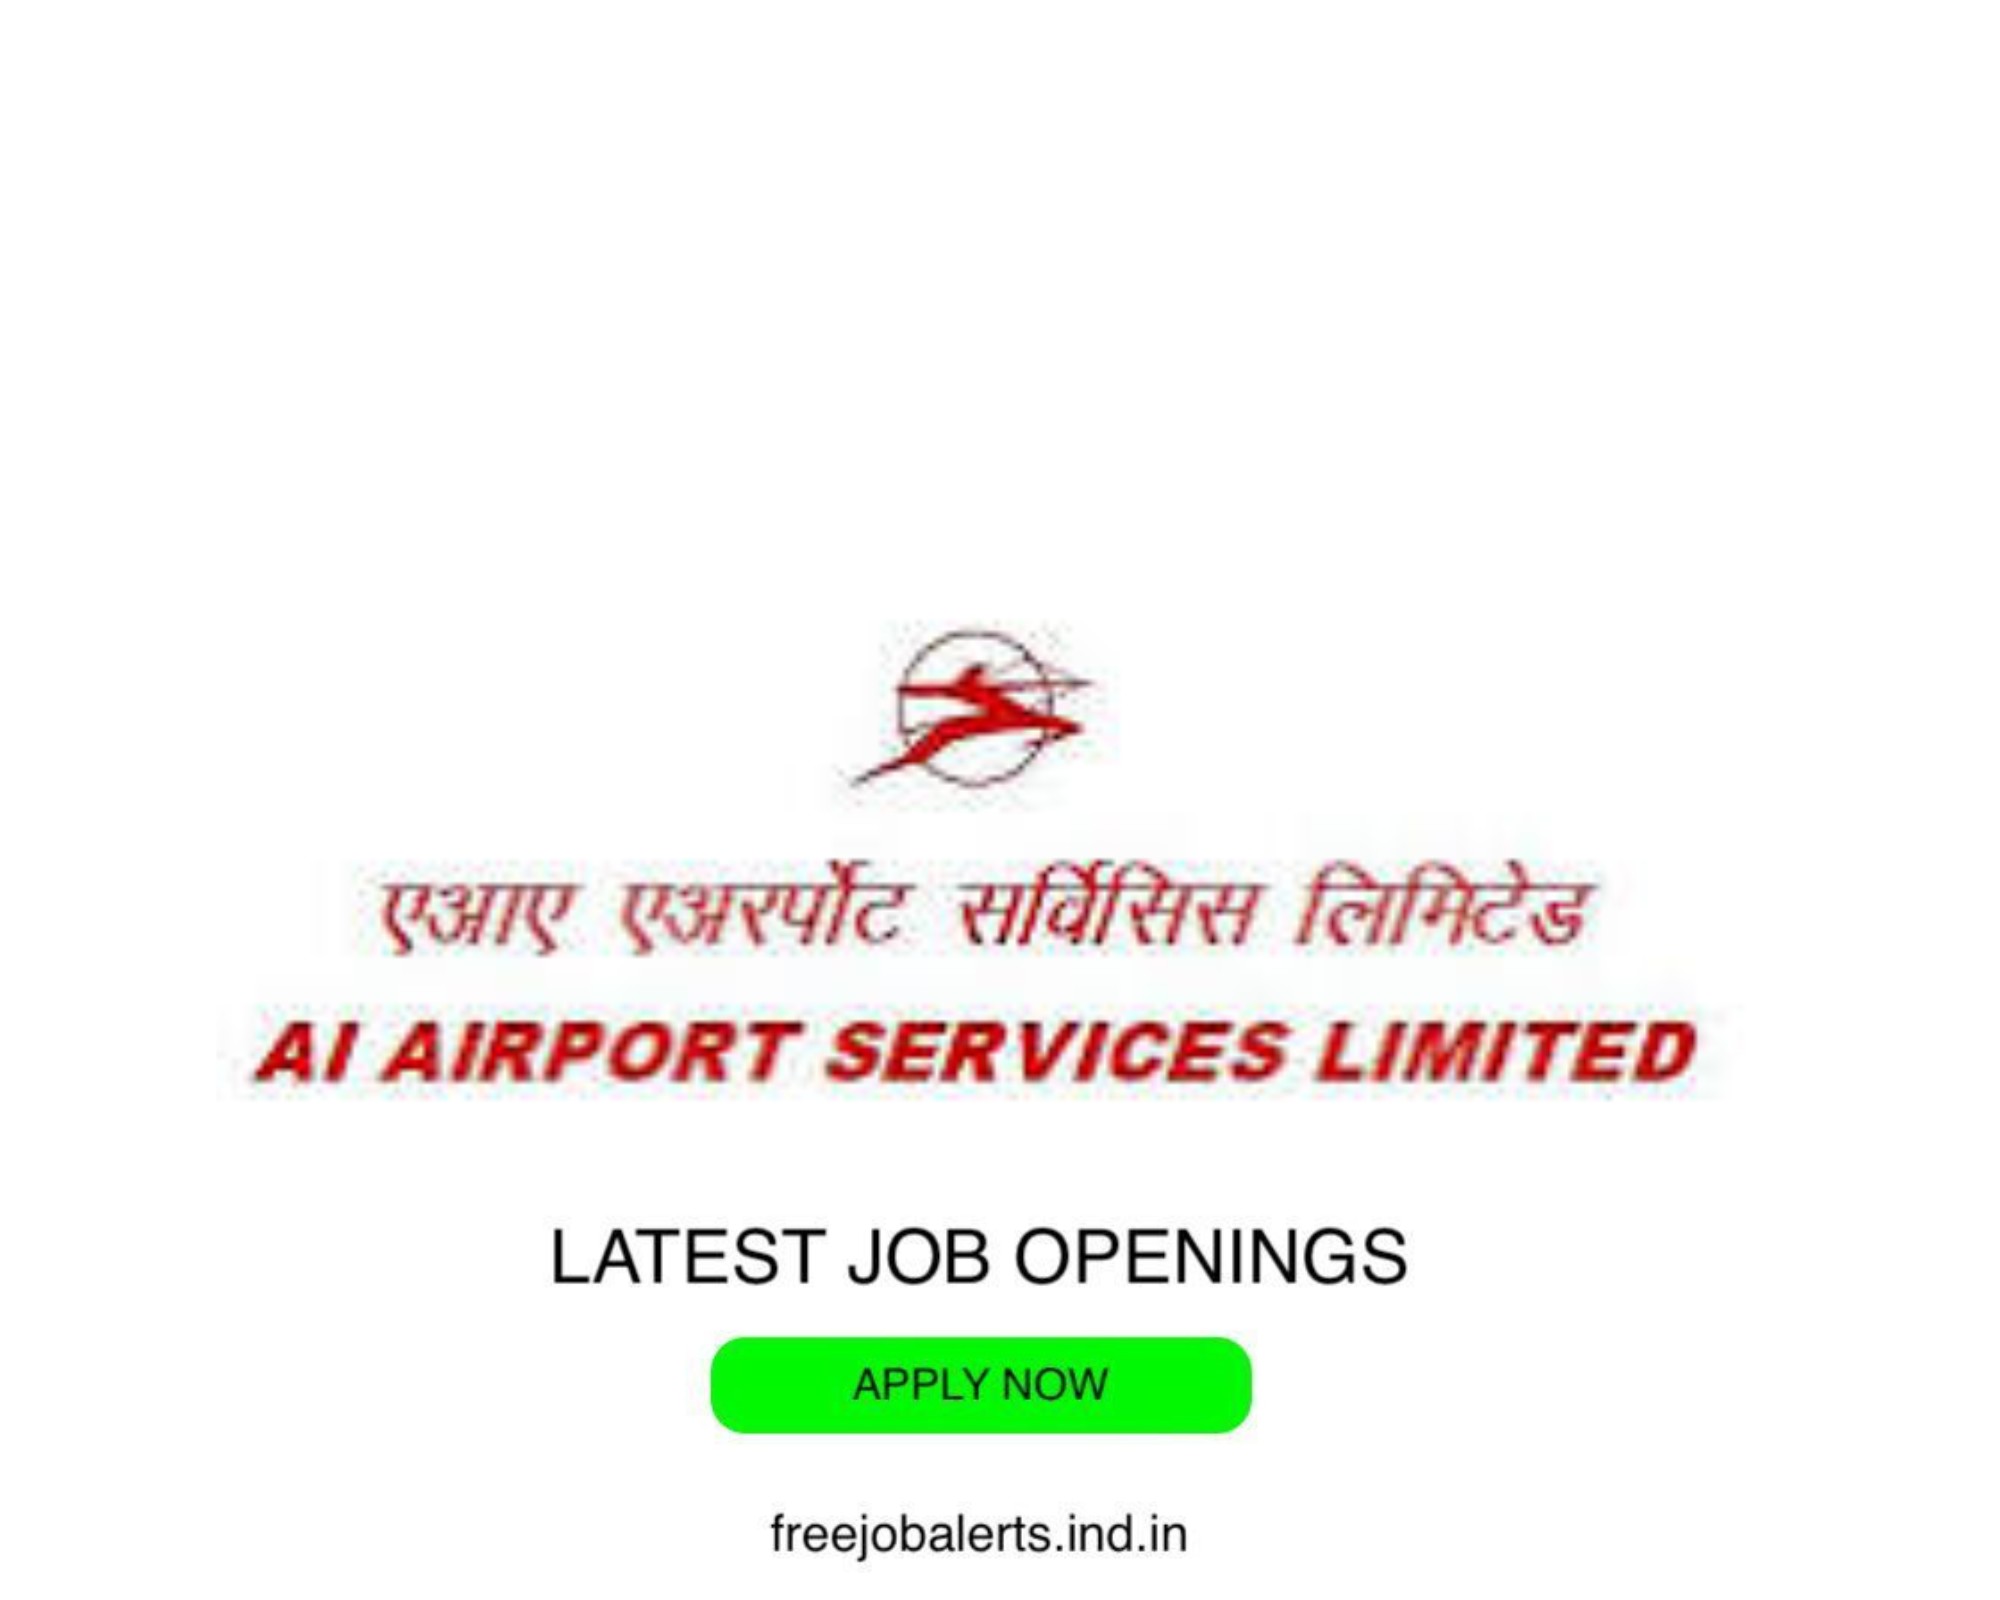 AIATSL - AI Airport Service Limited - Latest Govt job openings - Free job alerts, Indian Govt Jobs